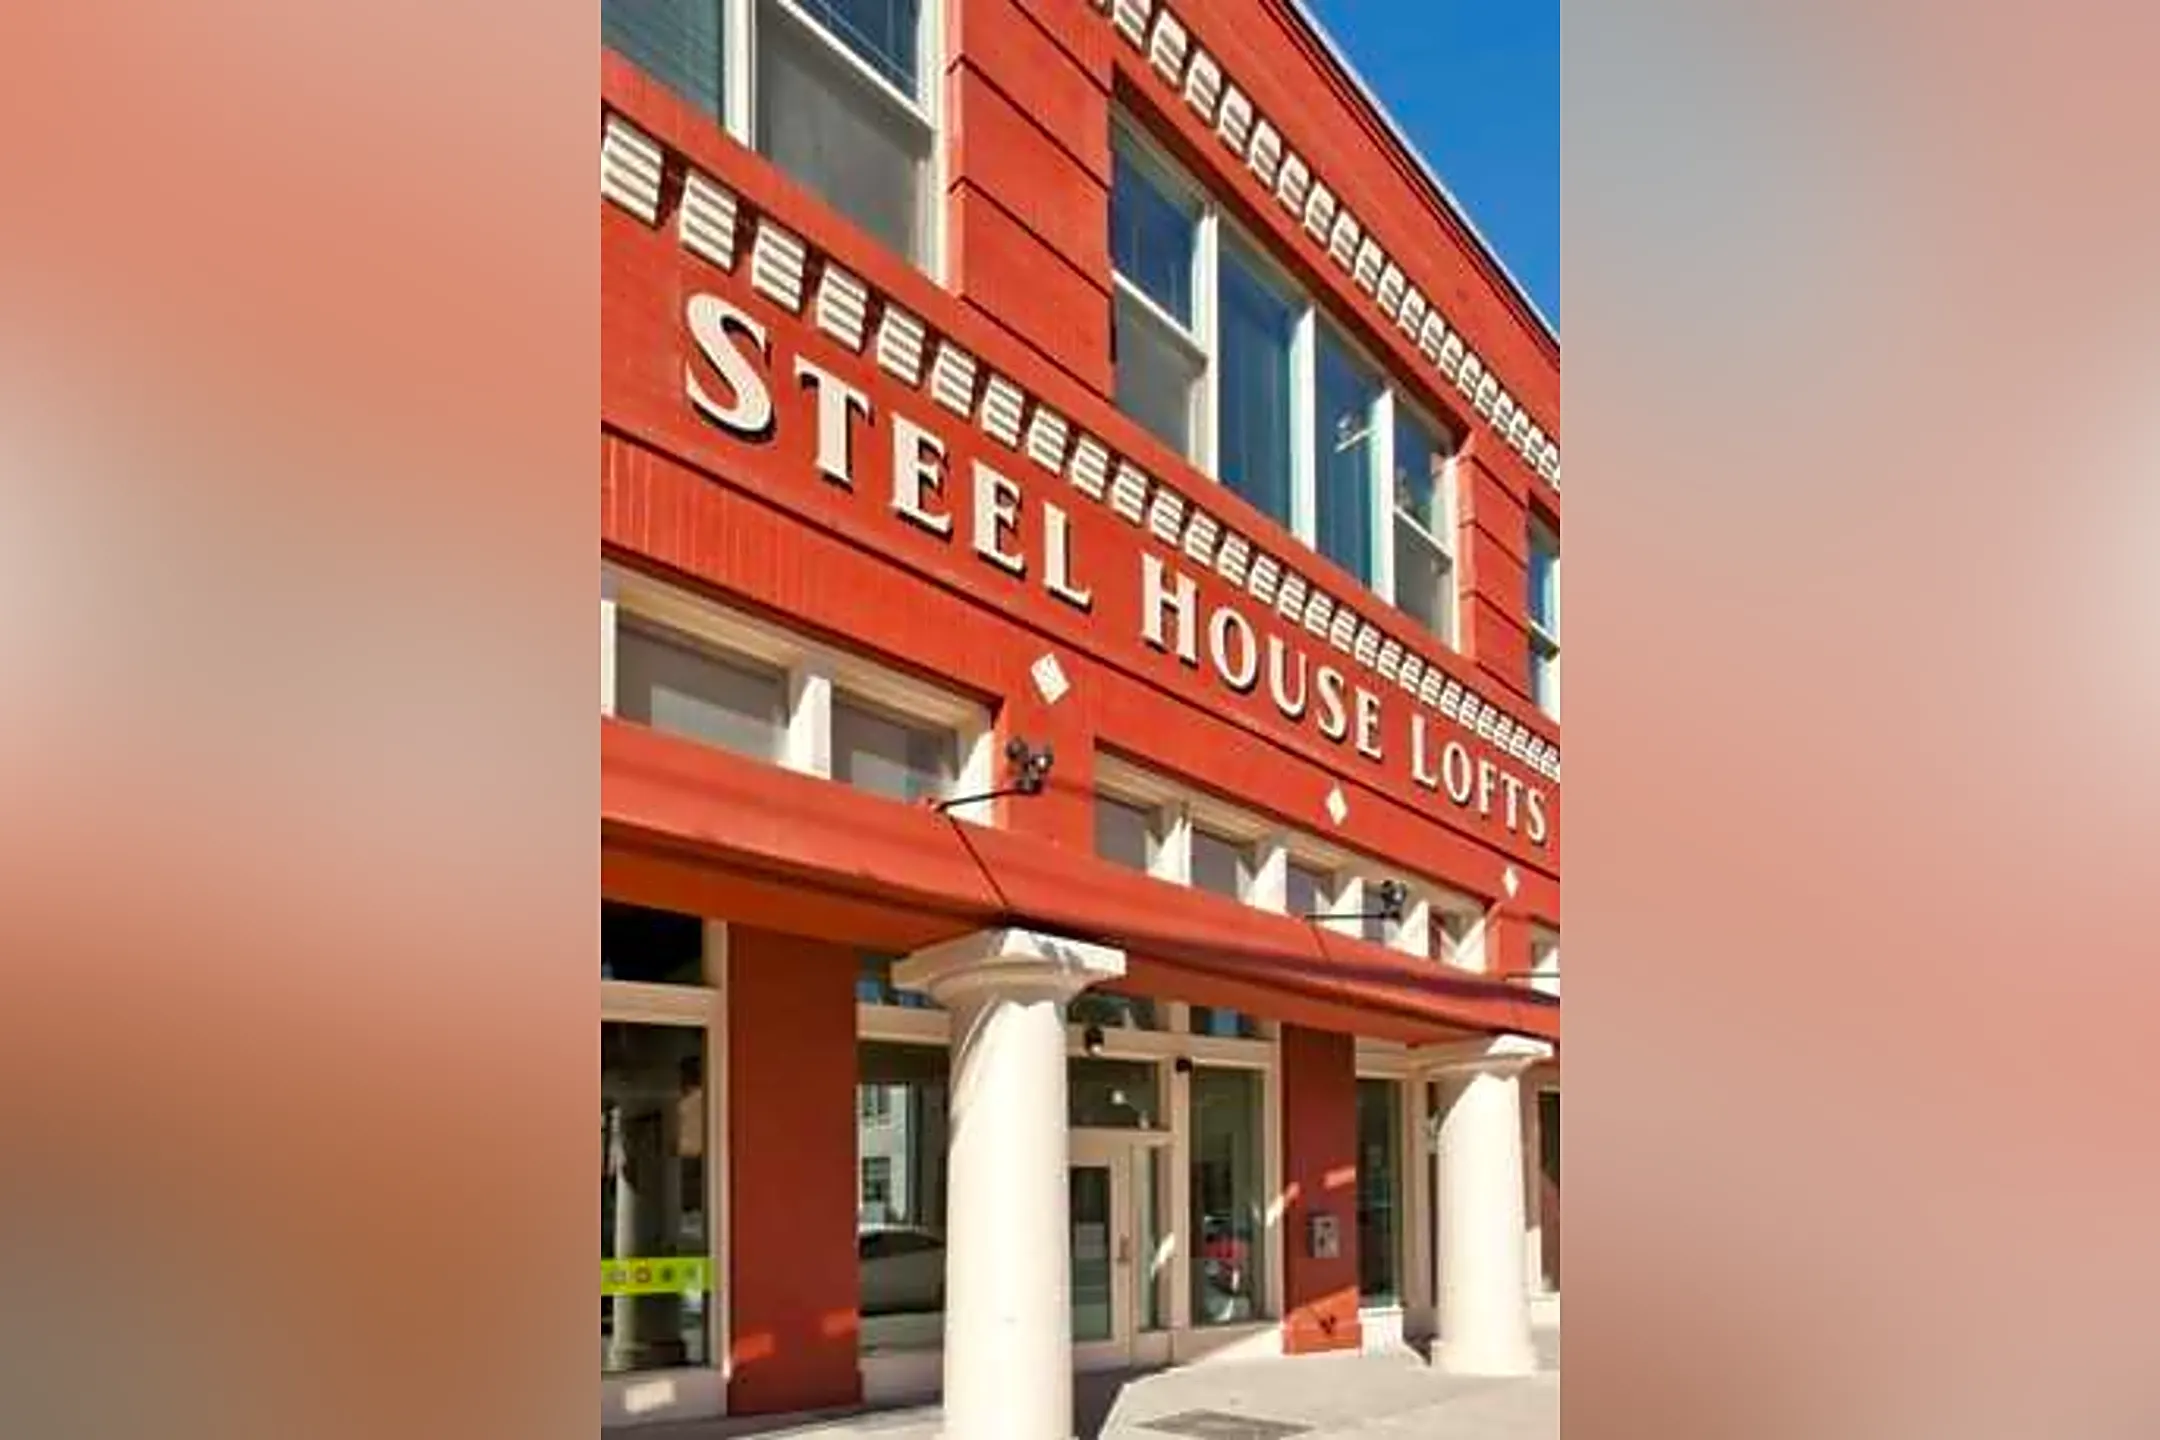 Steel House Lofts - San Antonio, TX